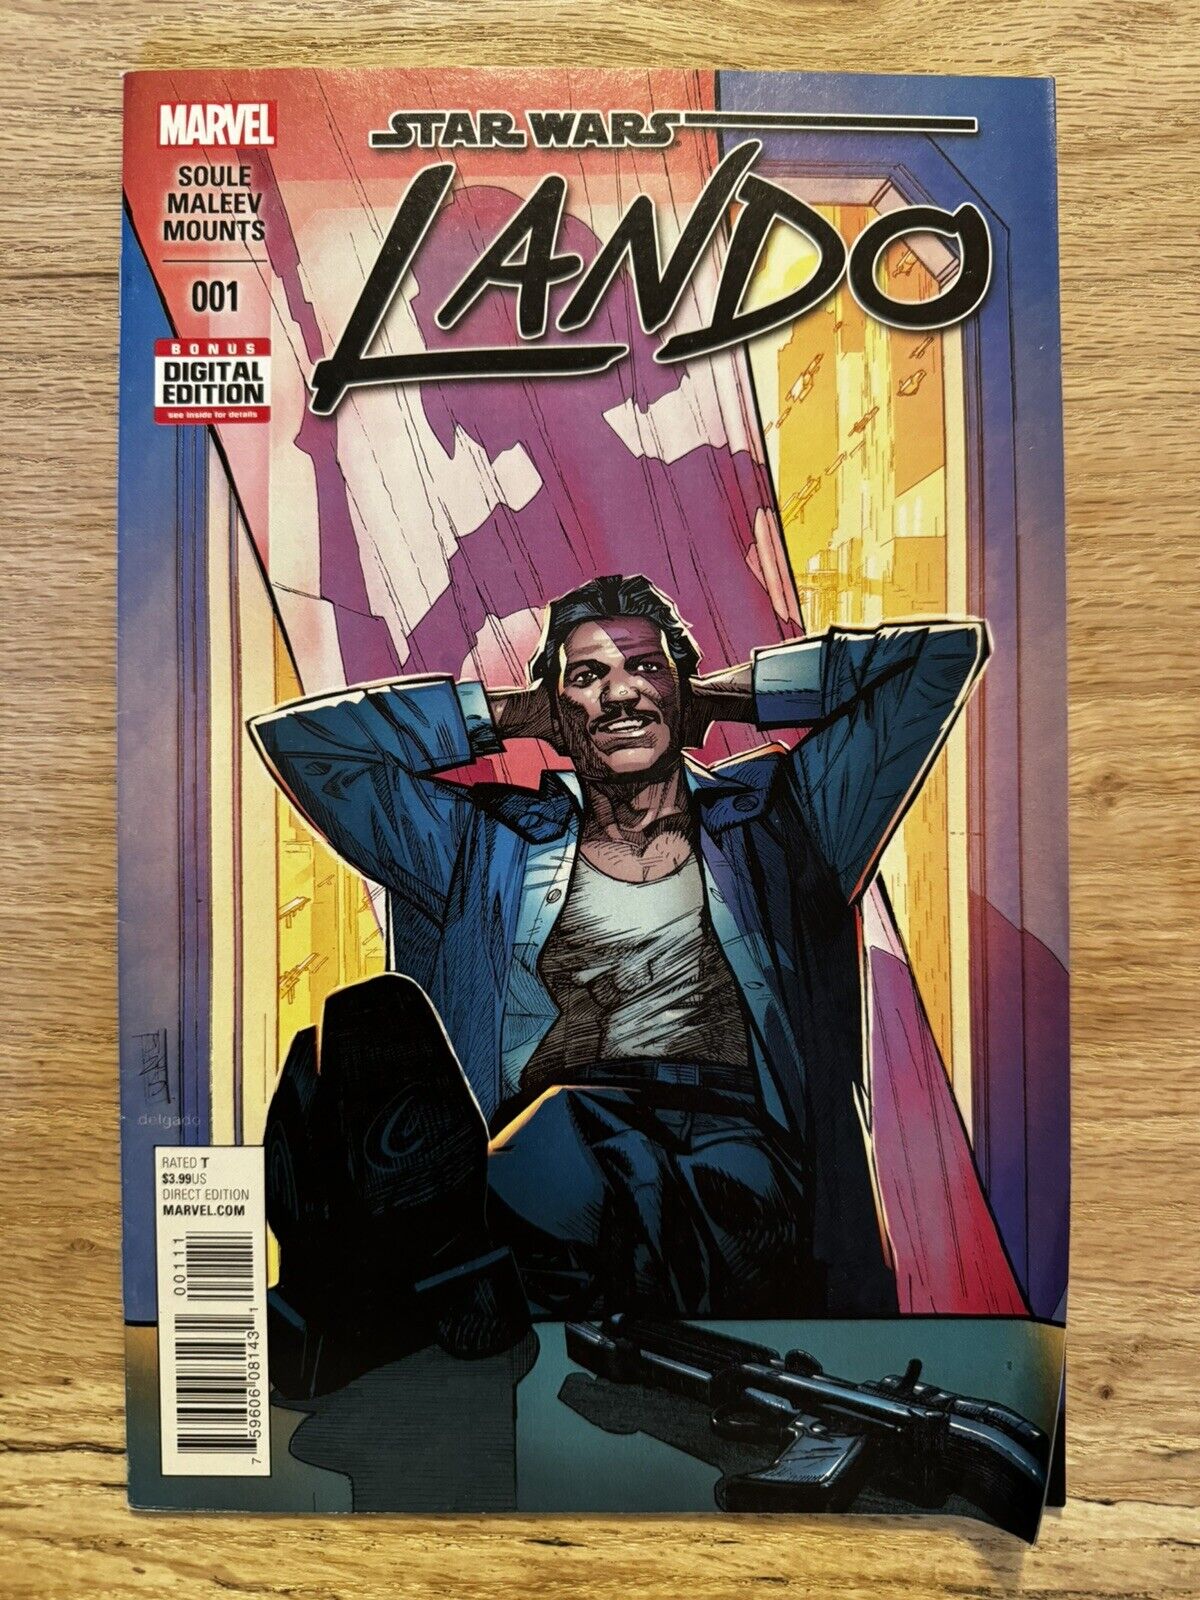 Star Wars LANDO #1 (2015) Marvel Comics, VG condition...